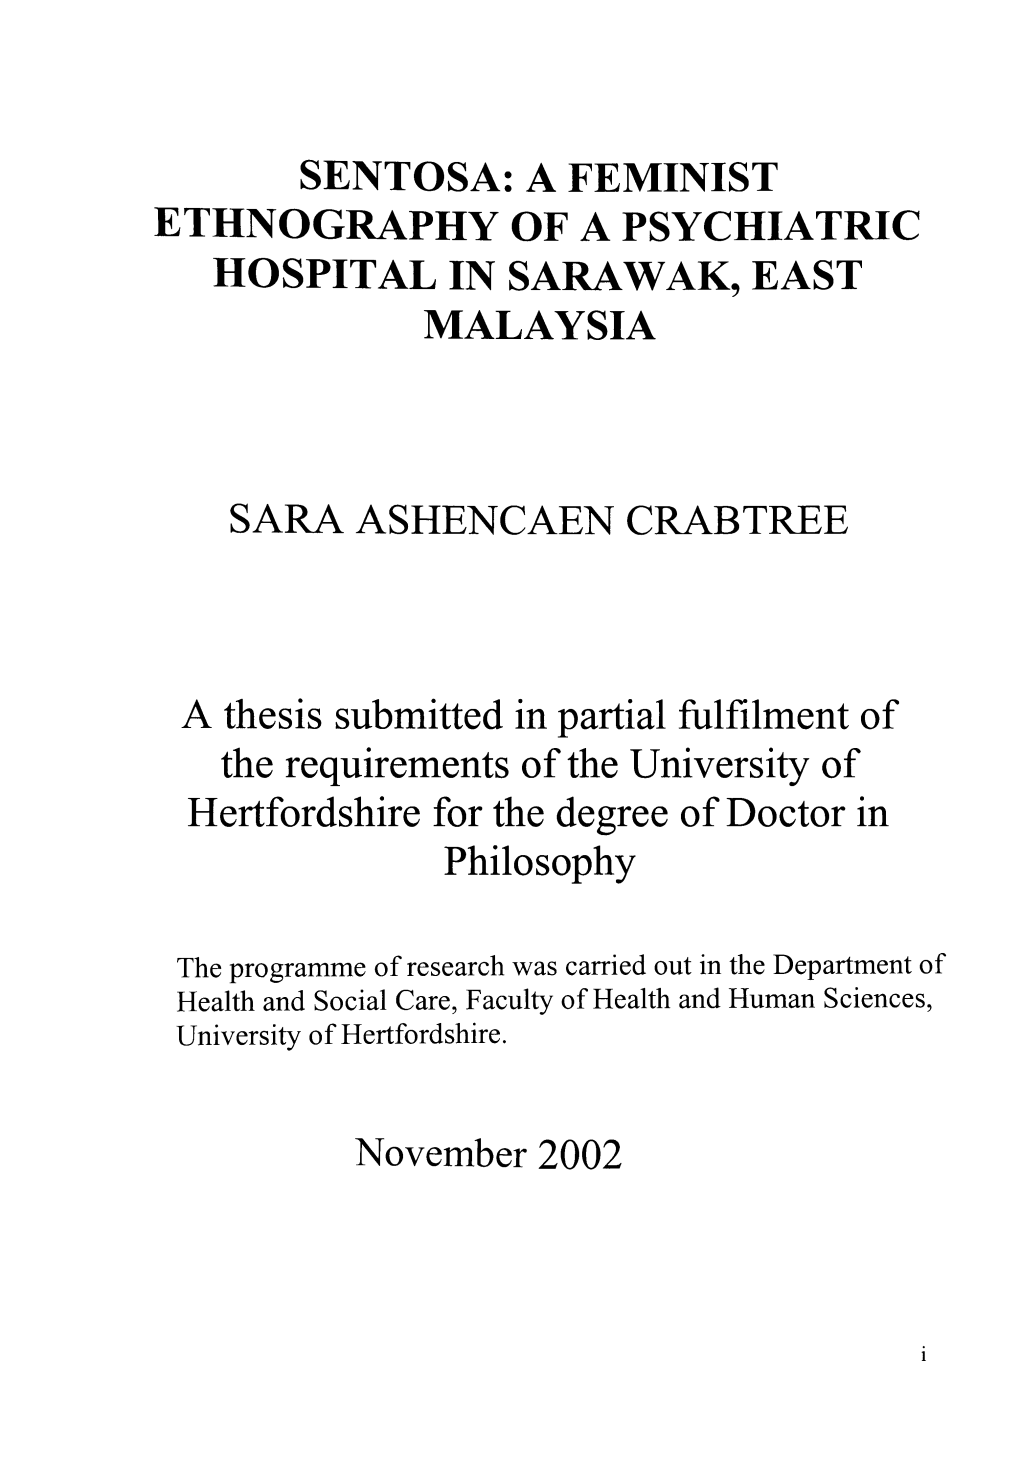 Sentosa: a Feminist Ethnography of a Psychiatric Hospital in Sarawak, East Malaysia